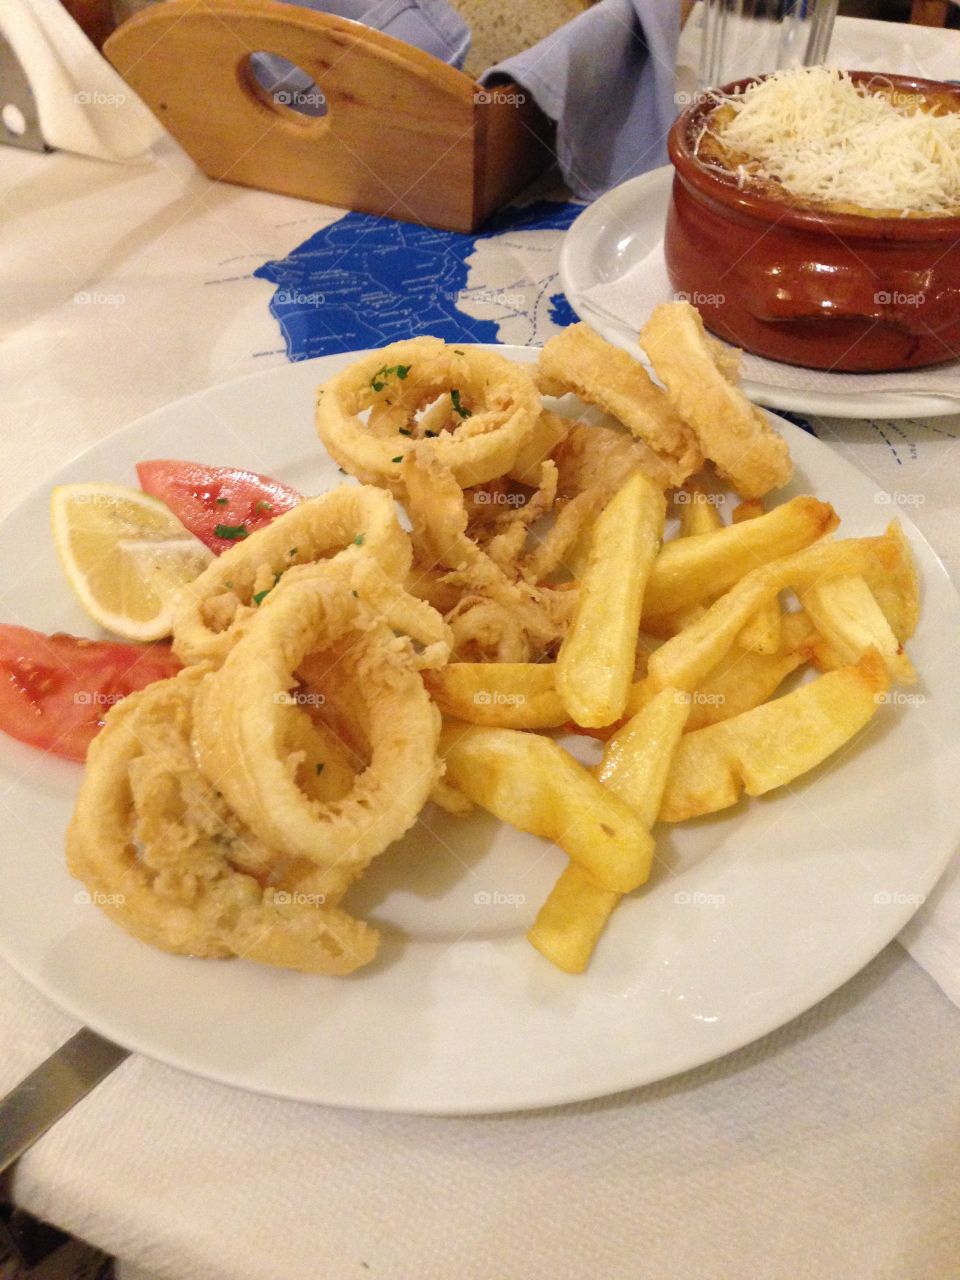 Fried calamari or squids